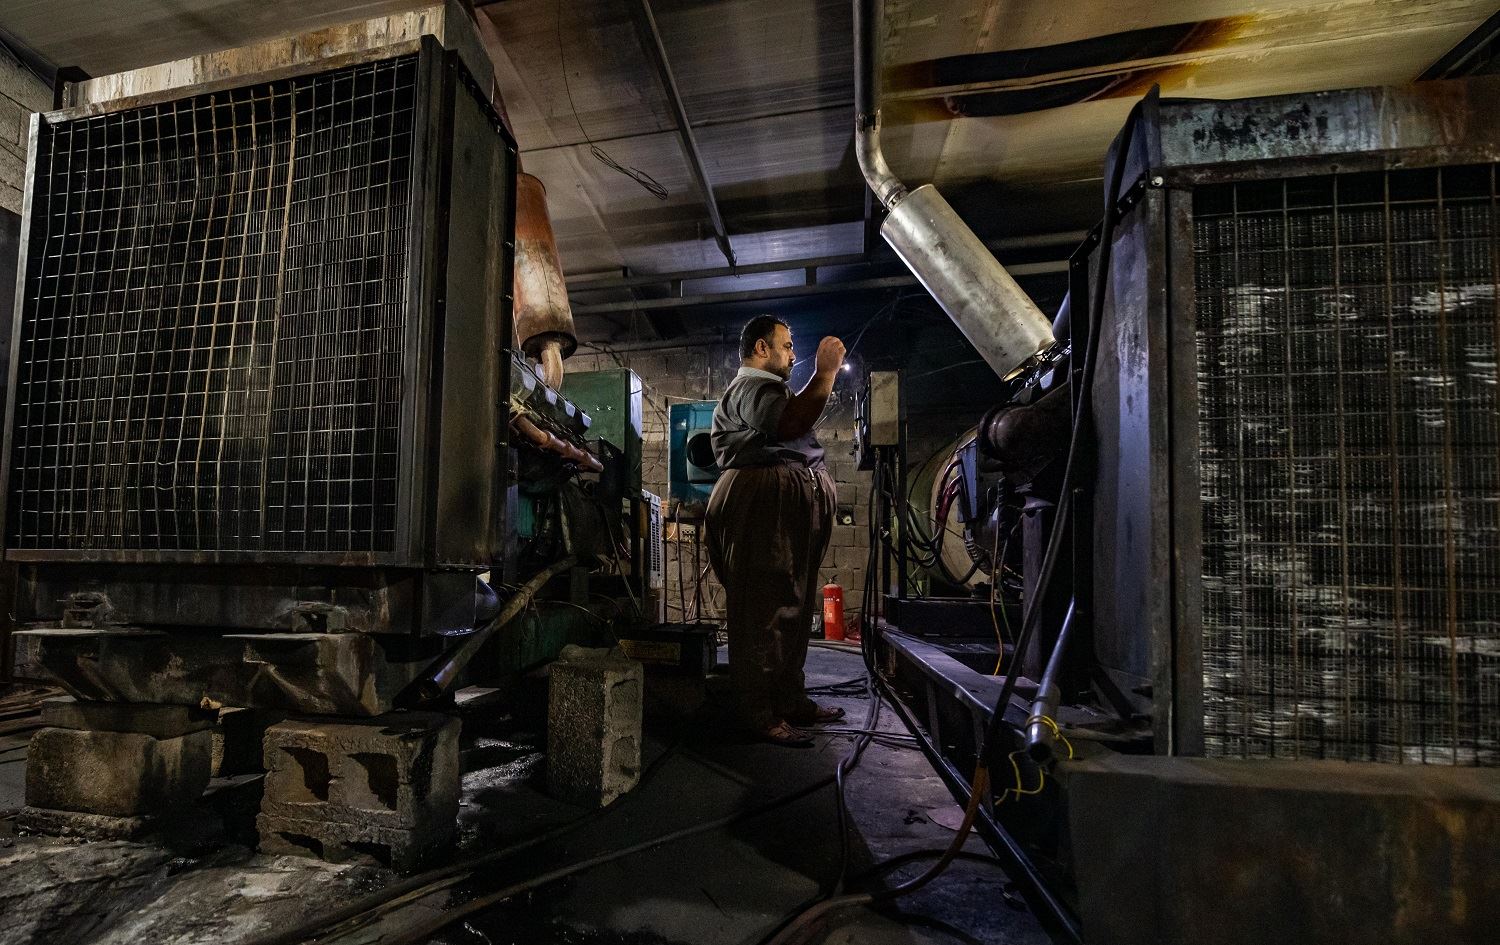 Deadly generators patch up Iraqi Kurdistan’s power supply